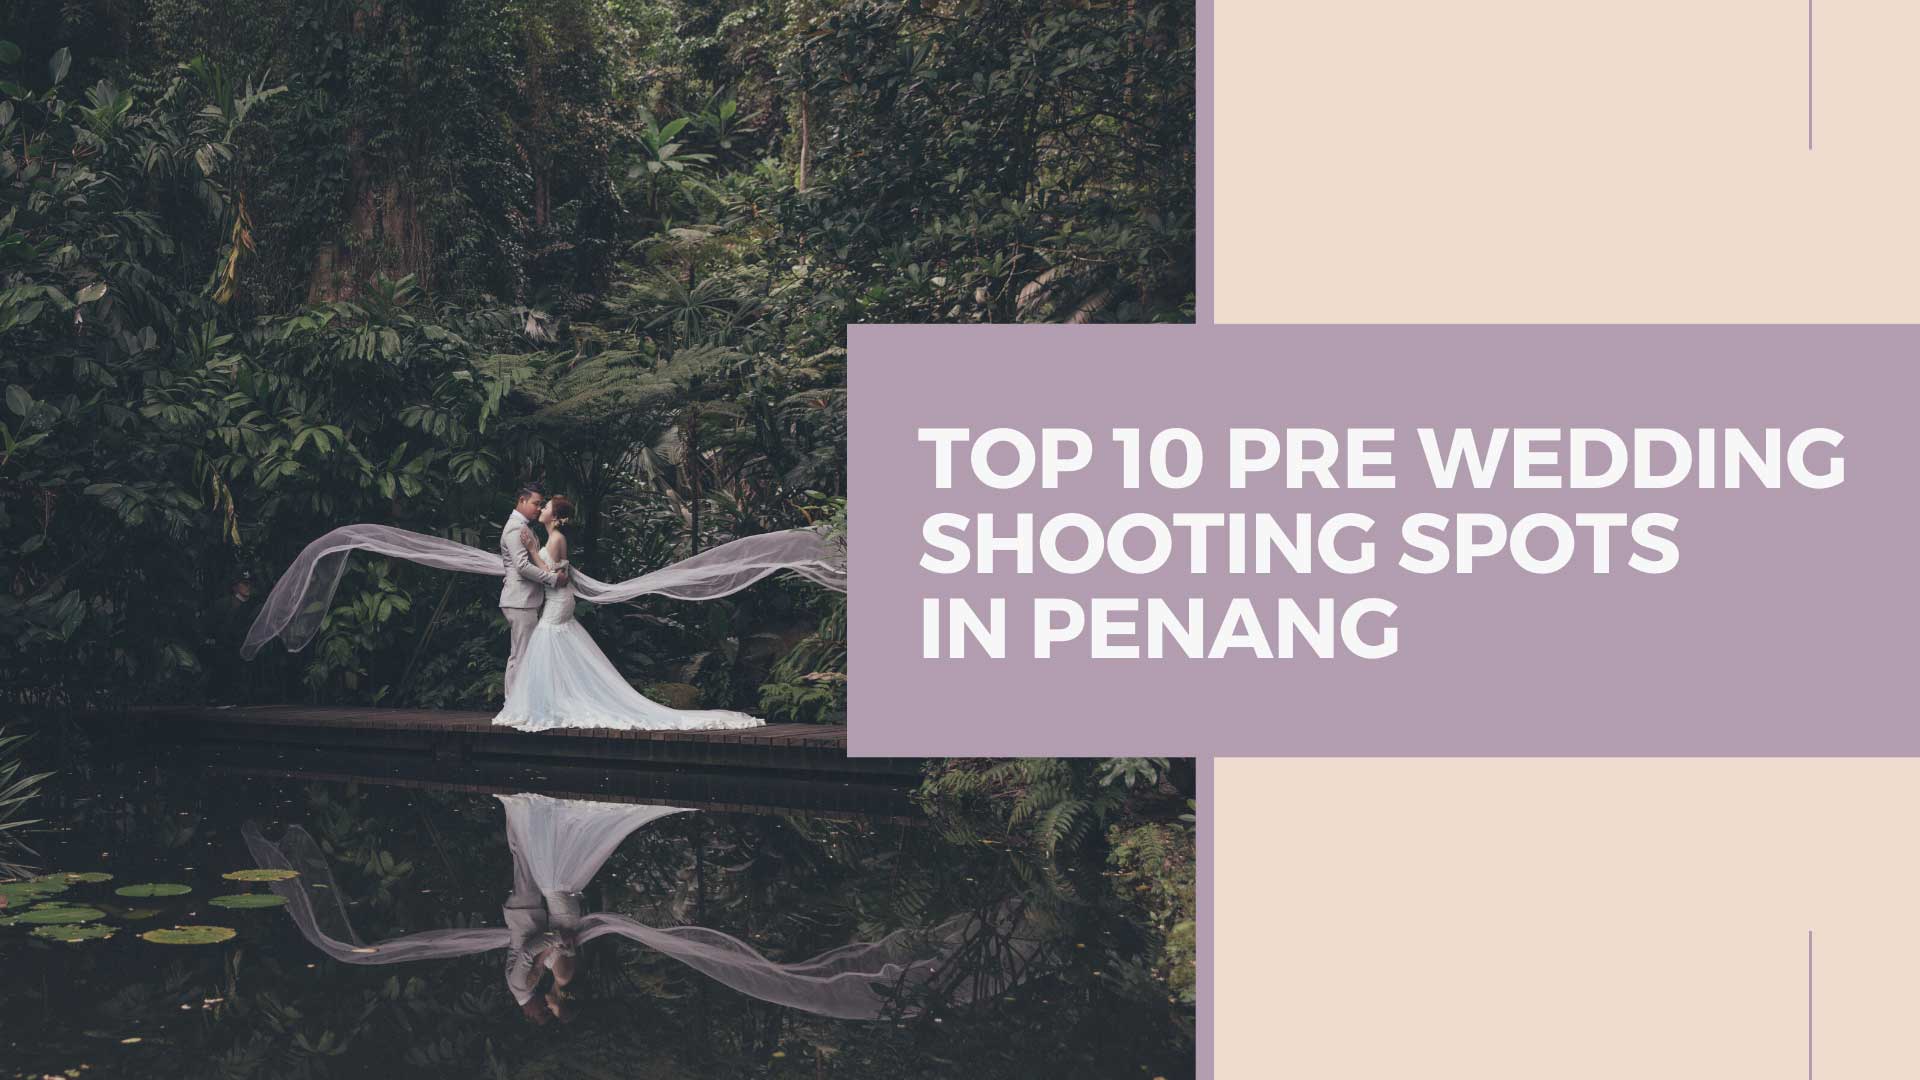 Top 10 Pre Wedding Shooting Spots in Penang